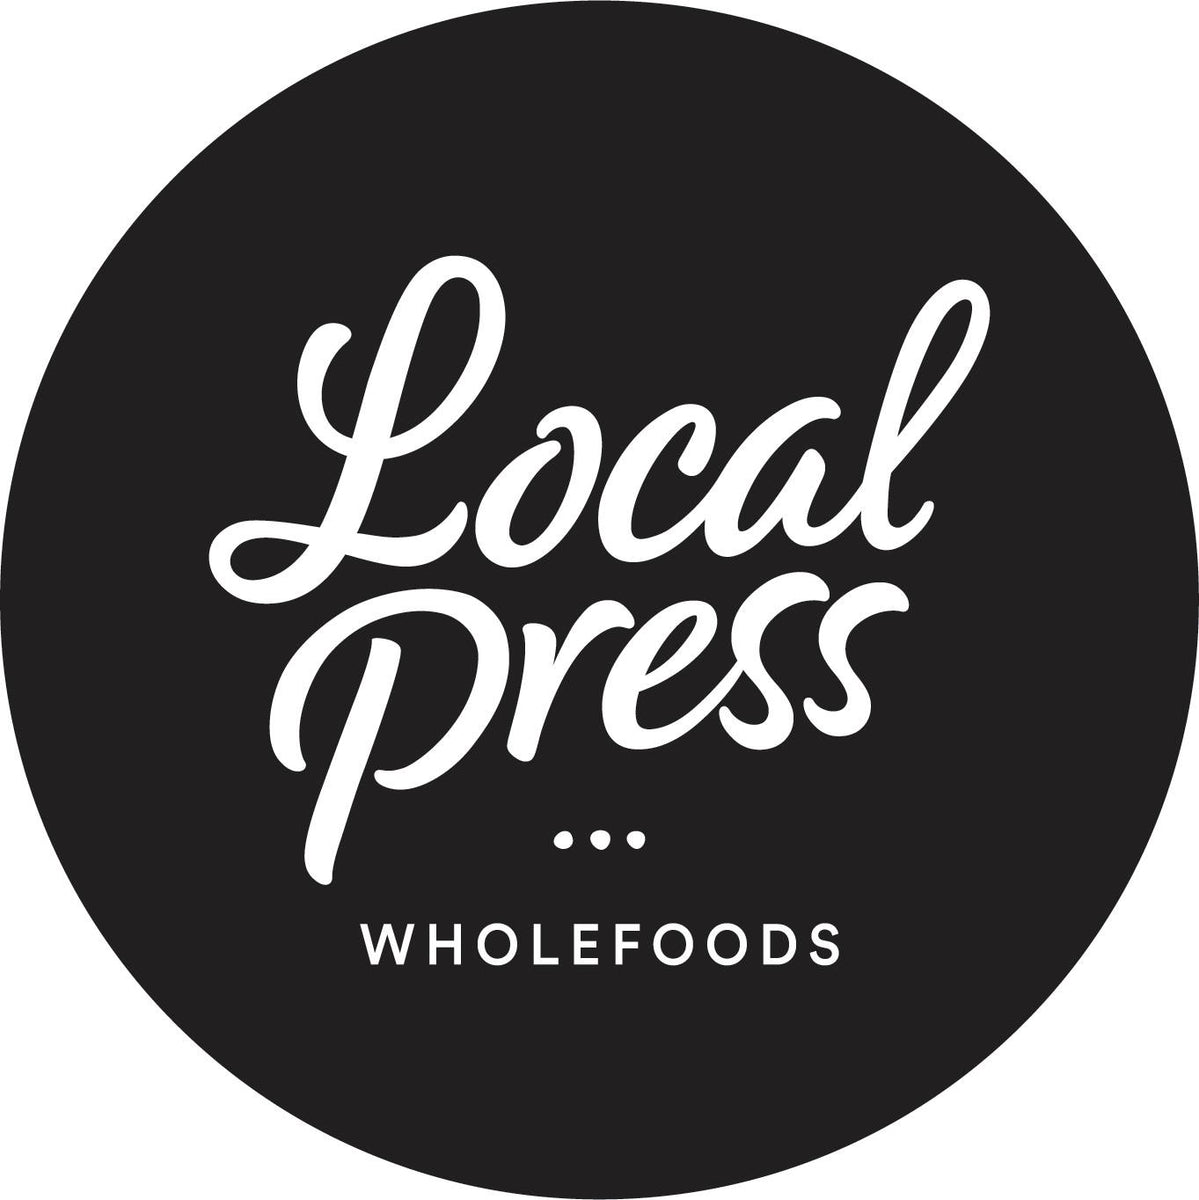 Local Press Wholefoods